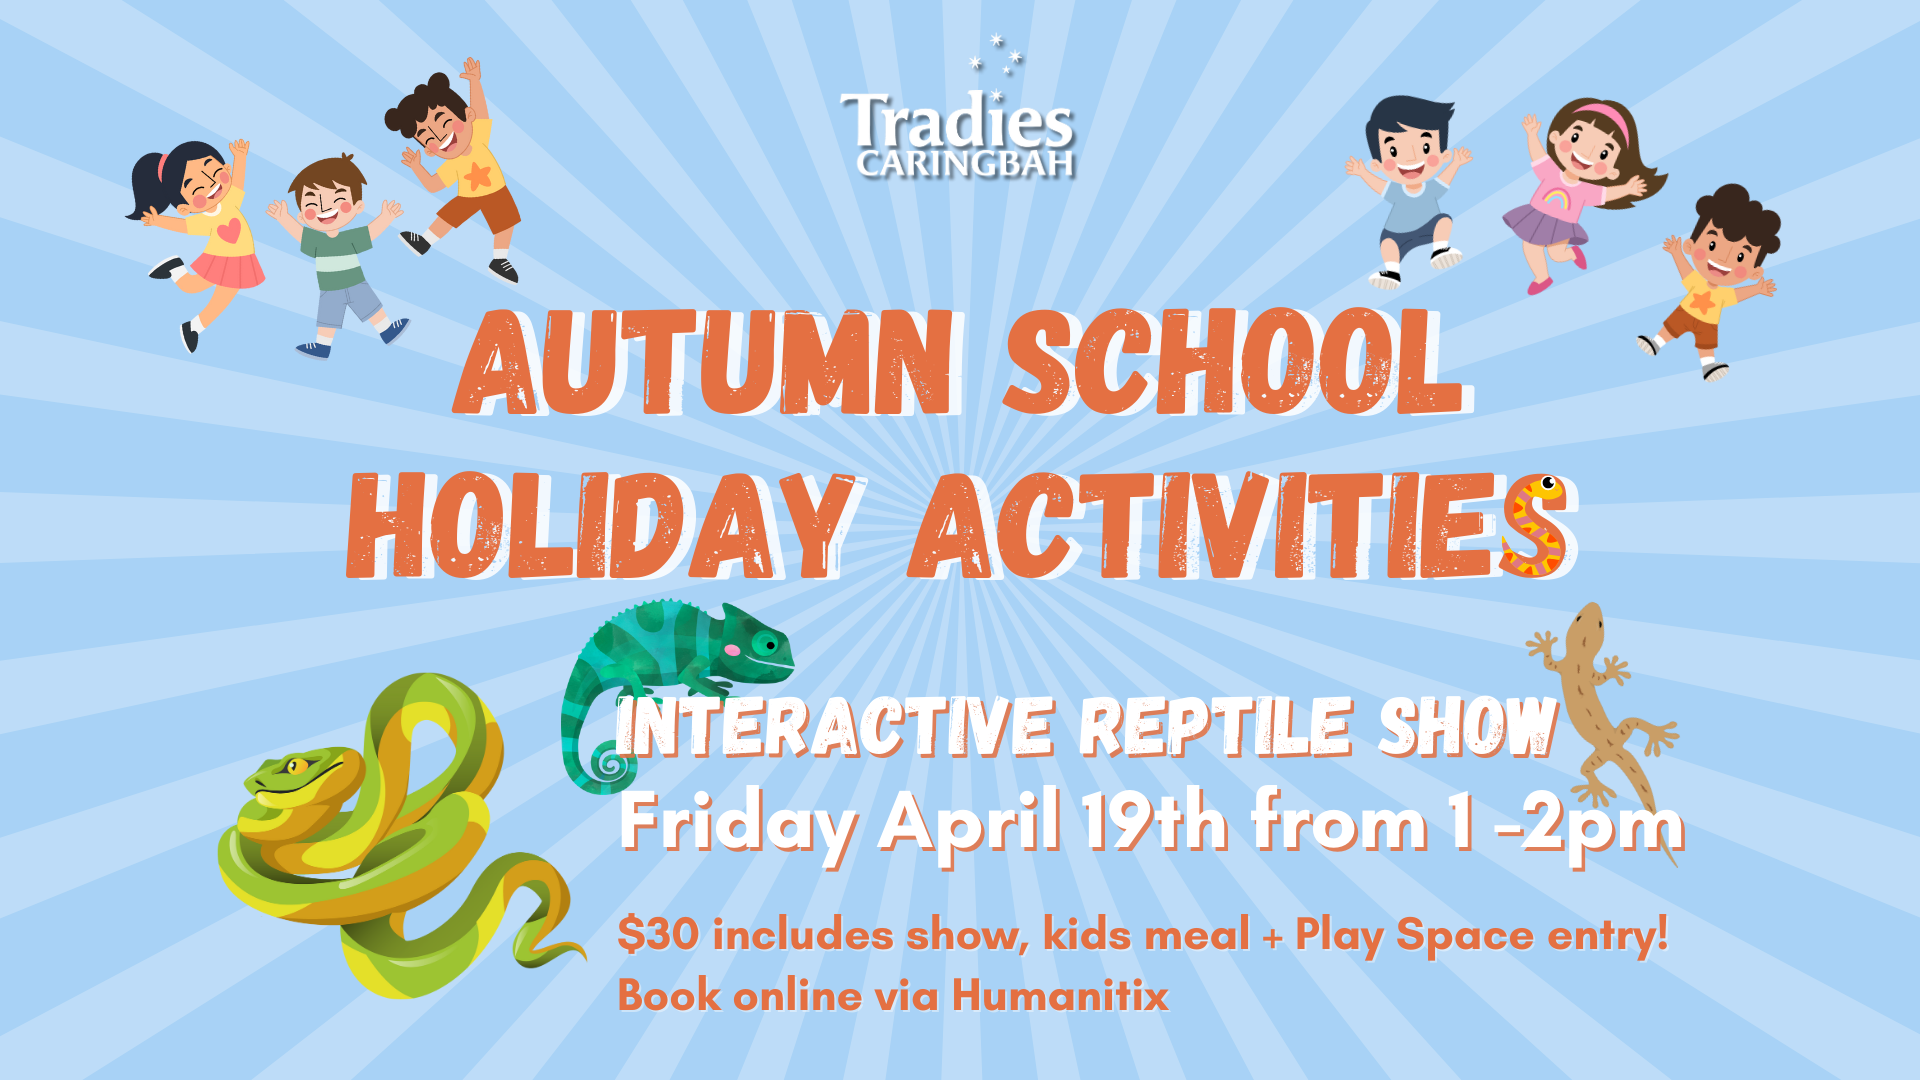 School holiday fun at Tradies Caringbah! Kids interactive reptile show Friday April 19th.